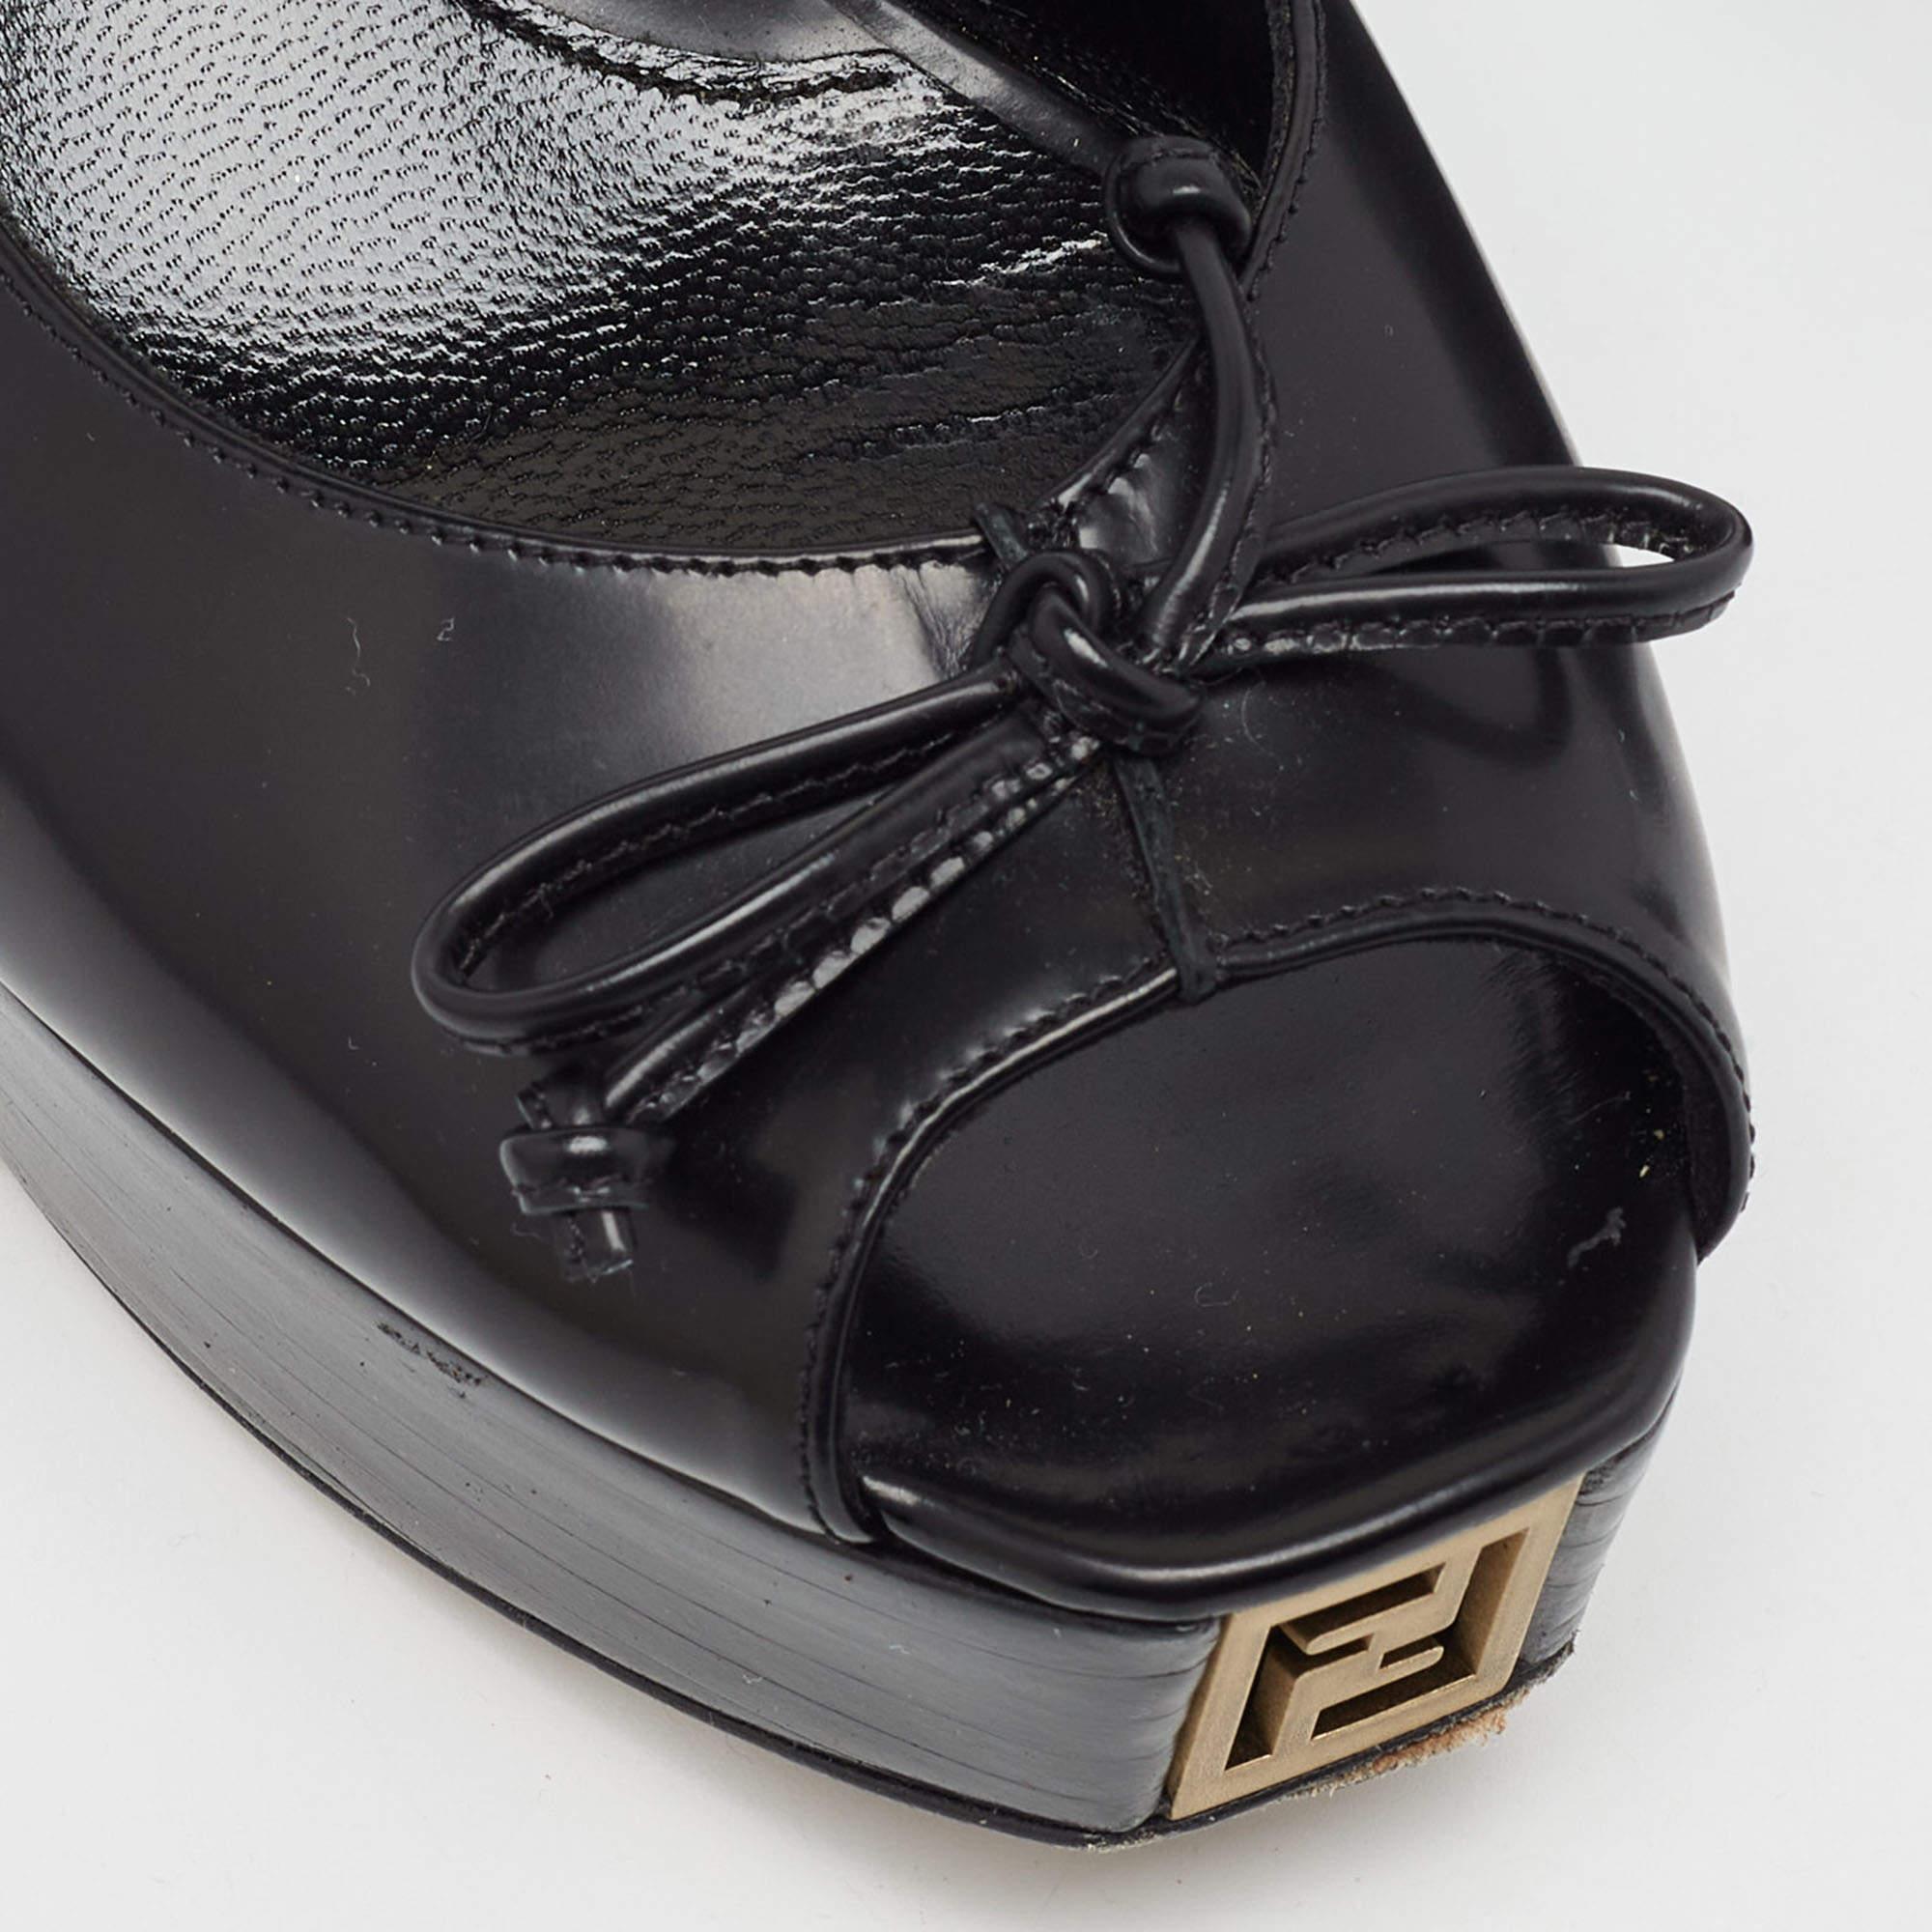 Fendi Black Leather Bow Fendista Slingback Pumps Size 37 1